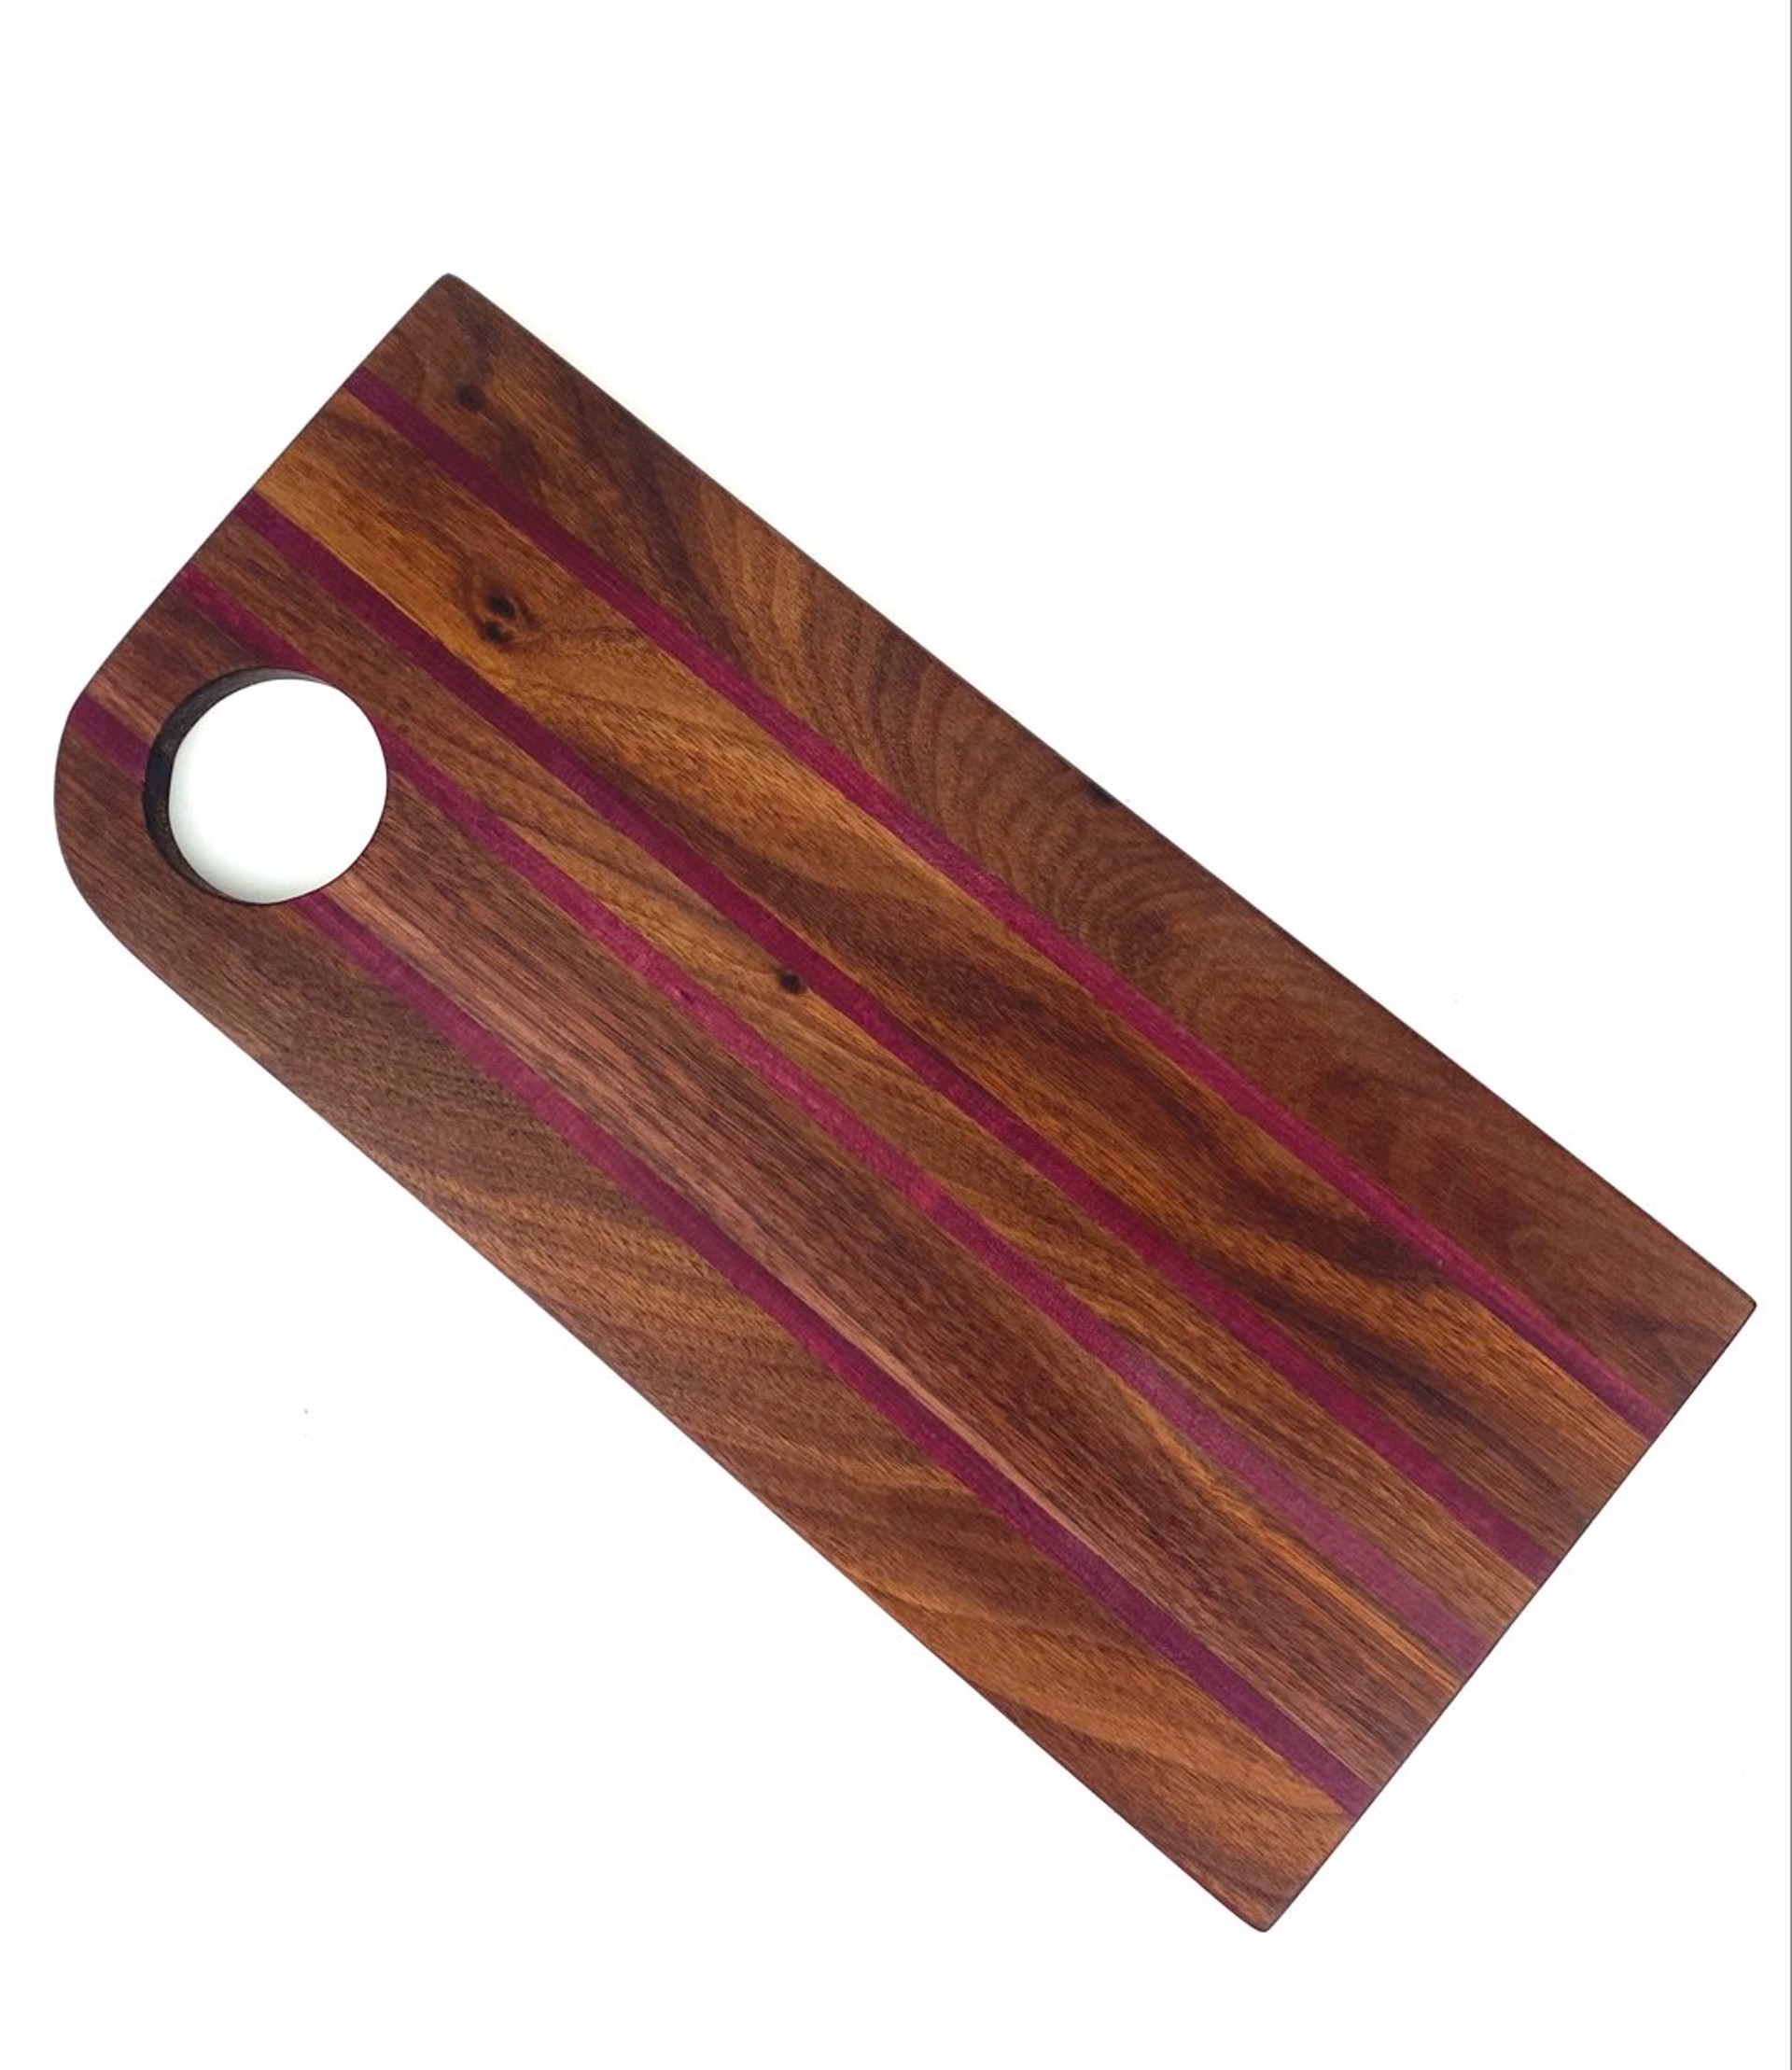 Walnut and Purple Wood Rectangle Board by Jon Cordes